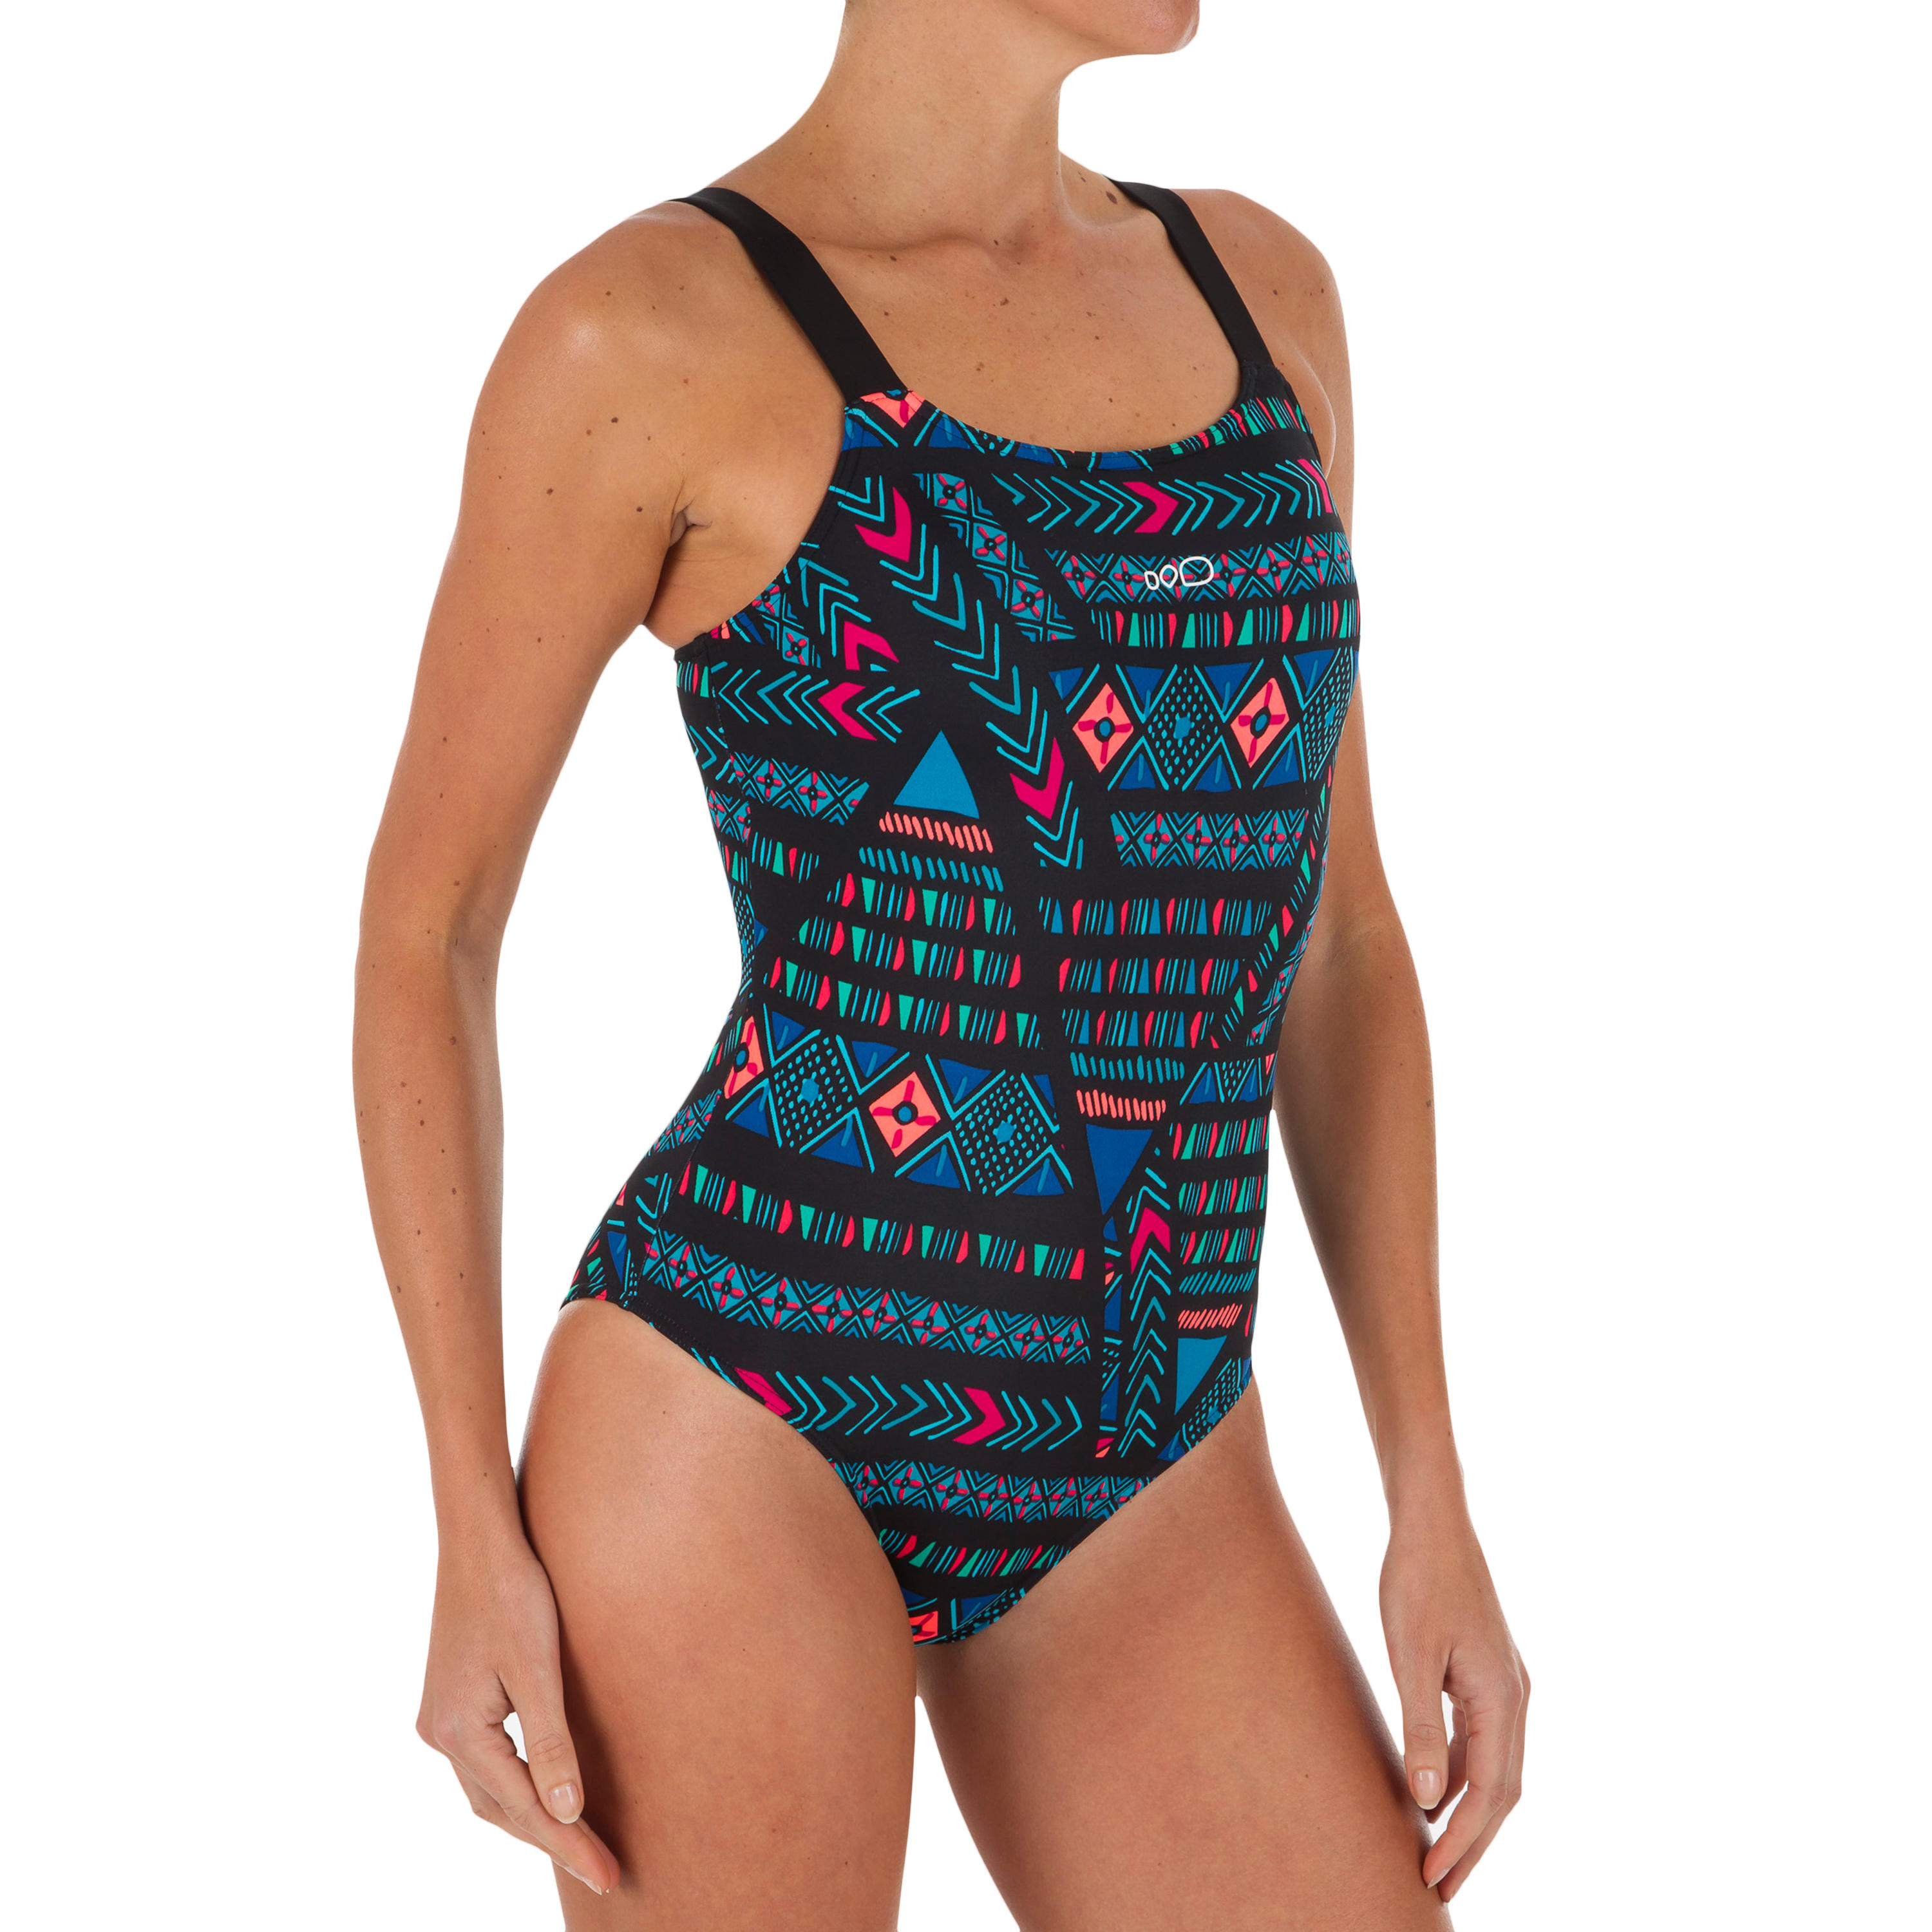 Afi women's one-piece swimsuit 